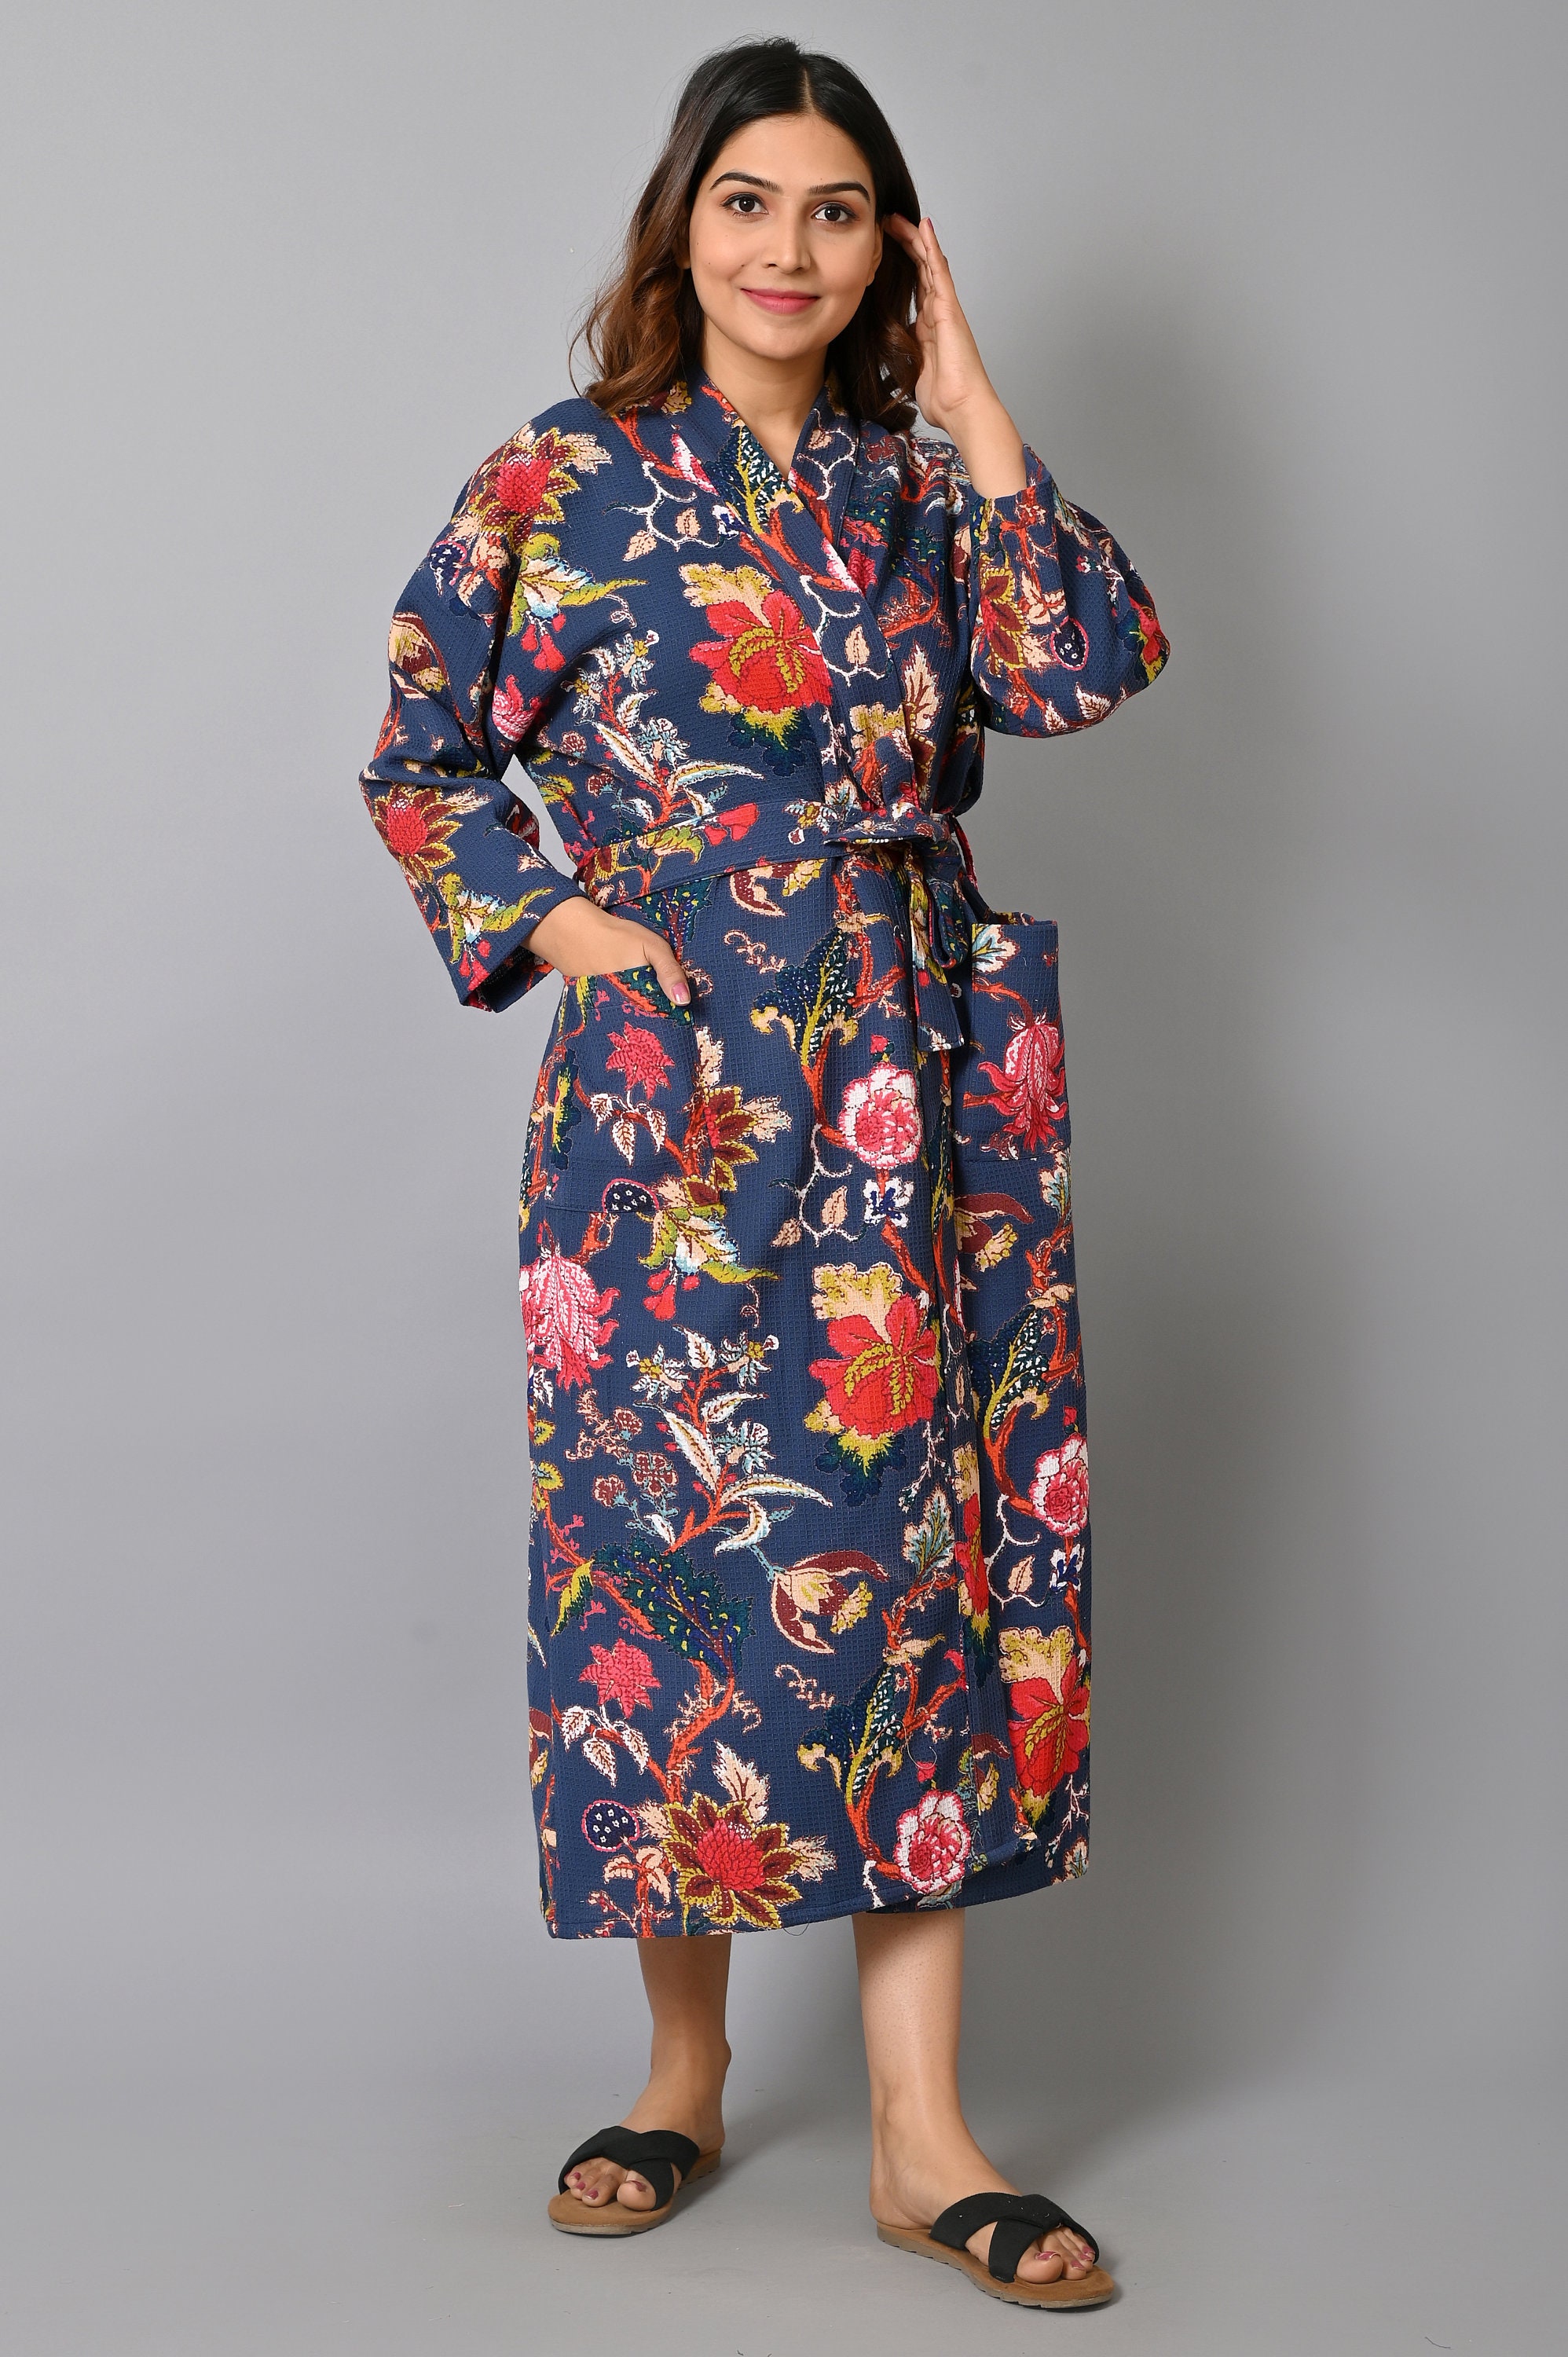 Buy 100% Waffle Kimono, Bridesmaid Gifts Robes, Turkish Linen Robe